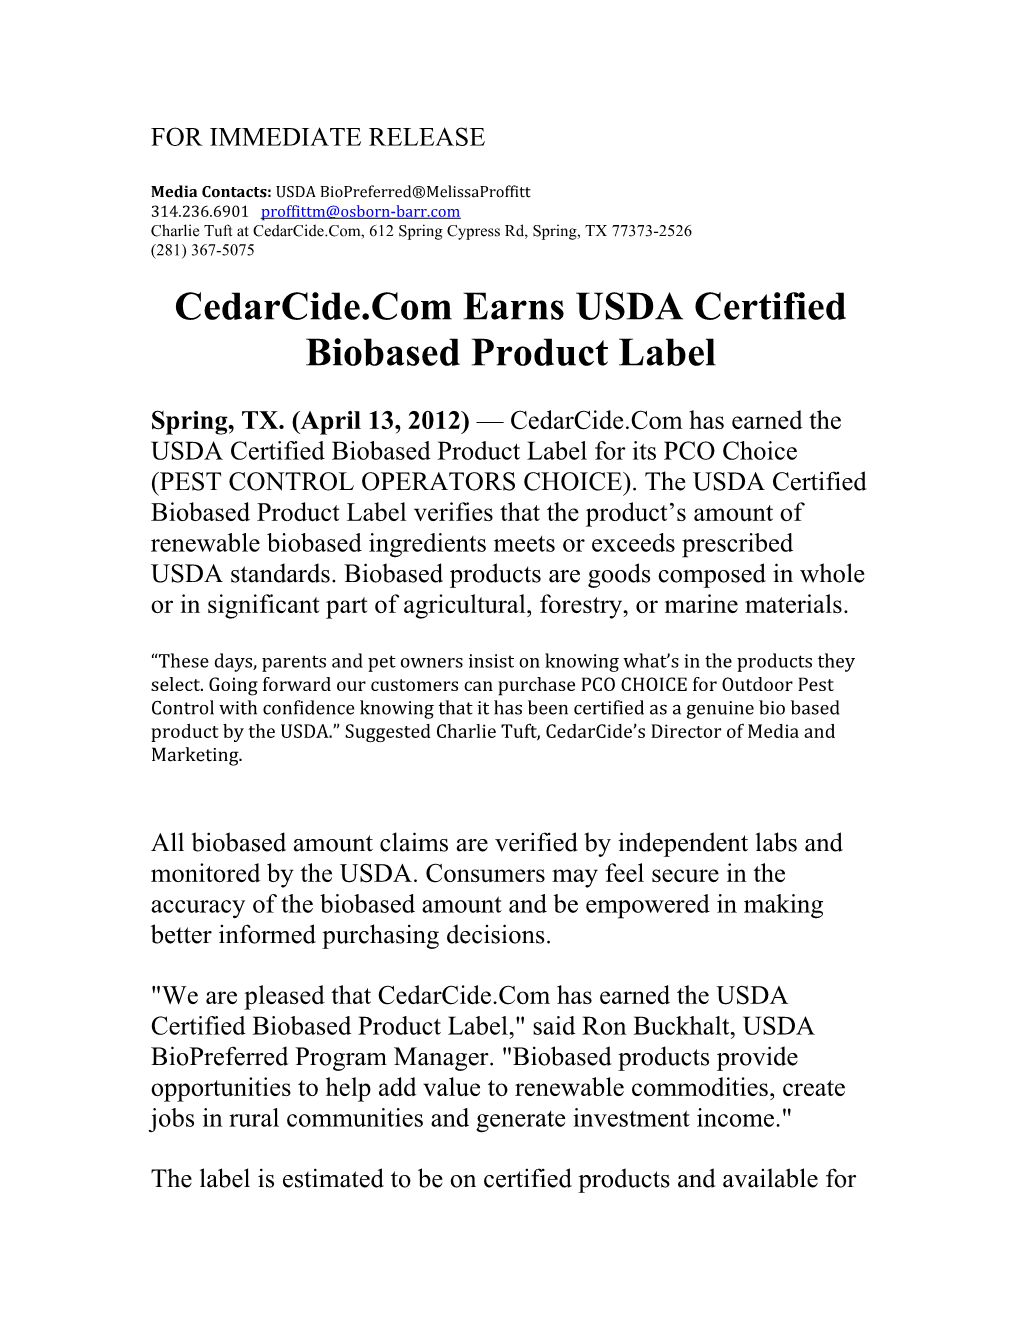 Cedarcide.Com Earns USDA Certified Biobased Product Label